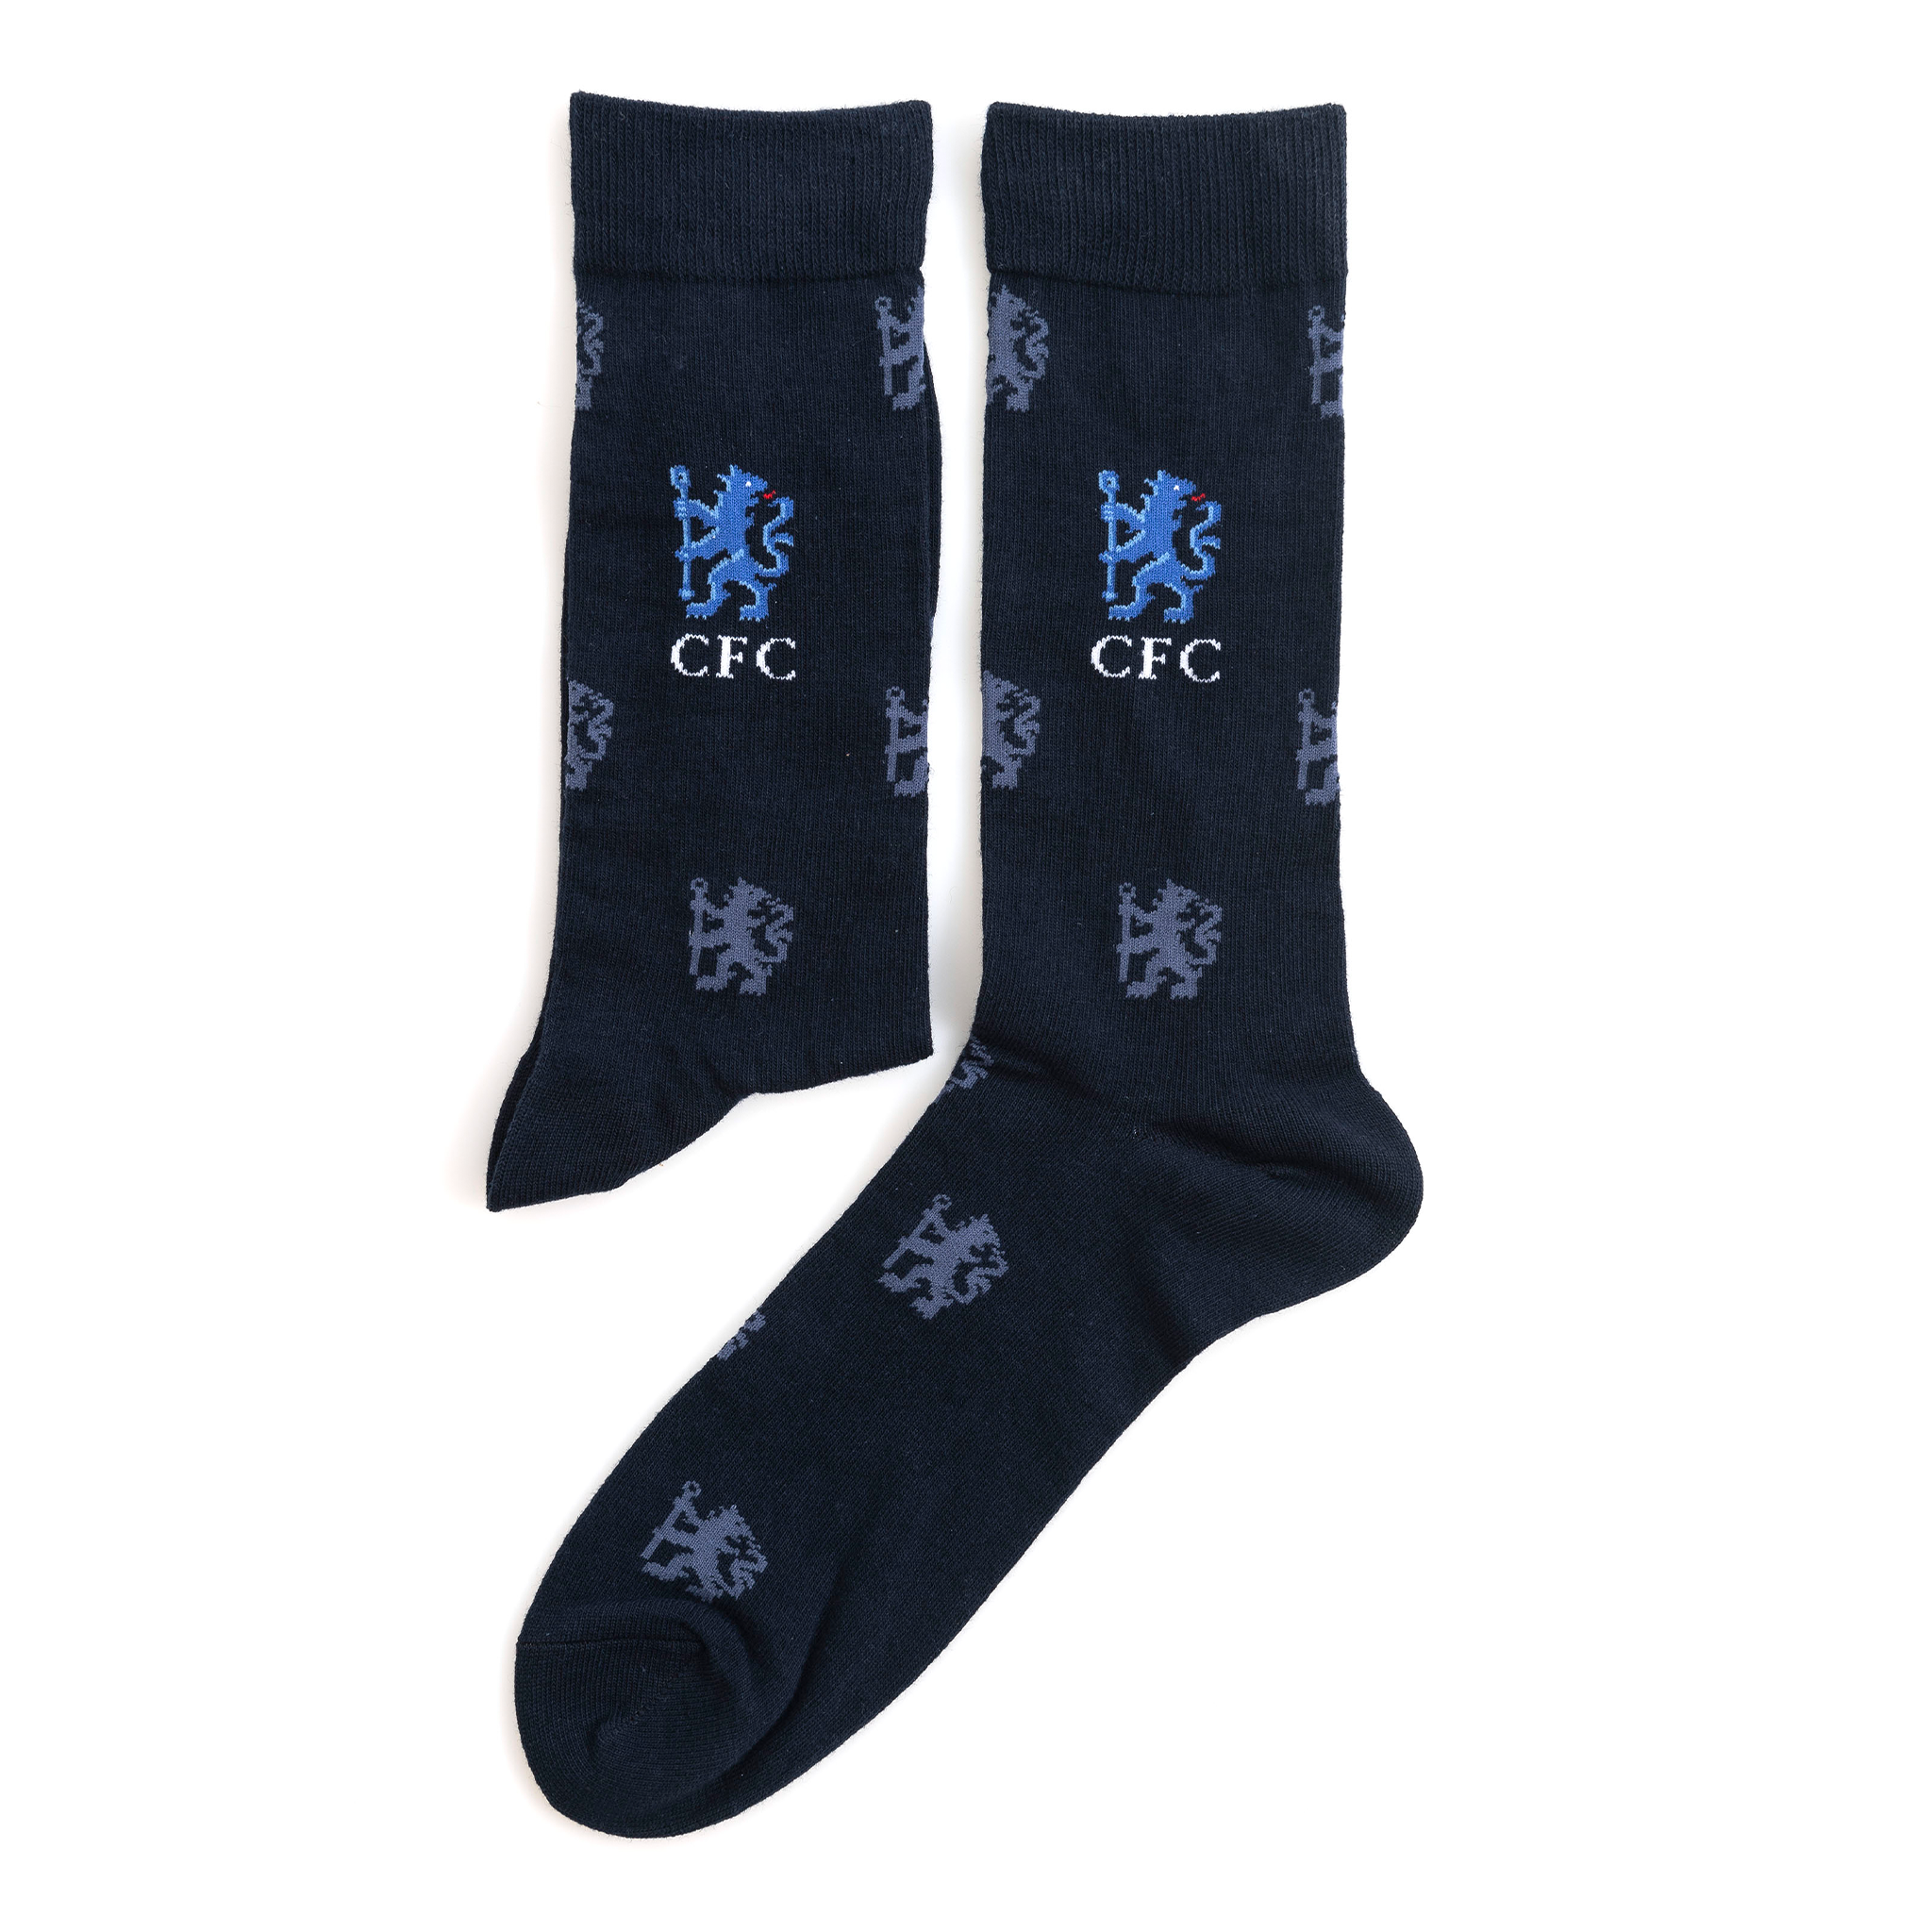 Chelsea FC Adult Socks - 3 Pack